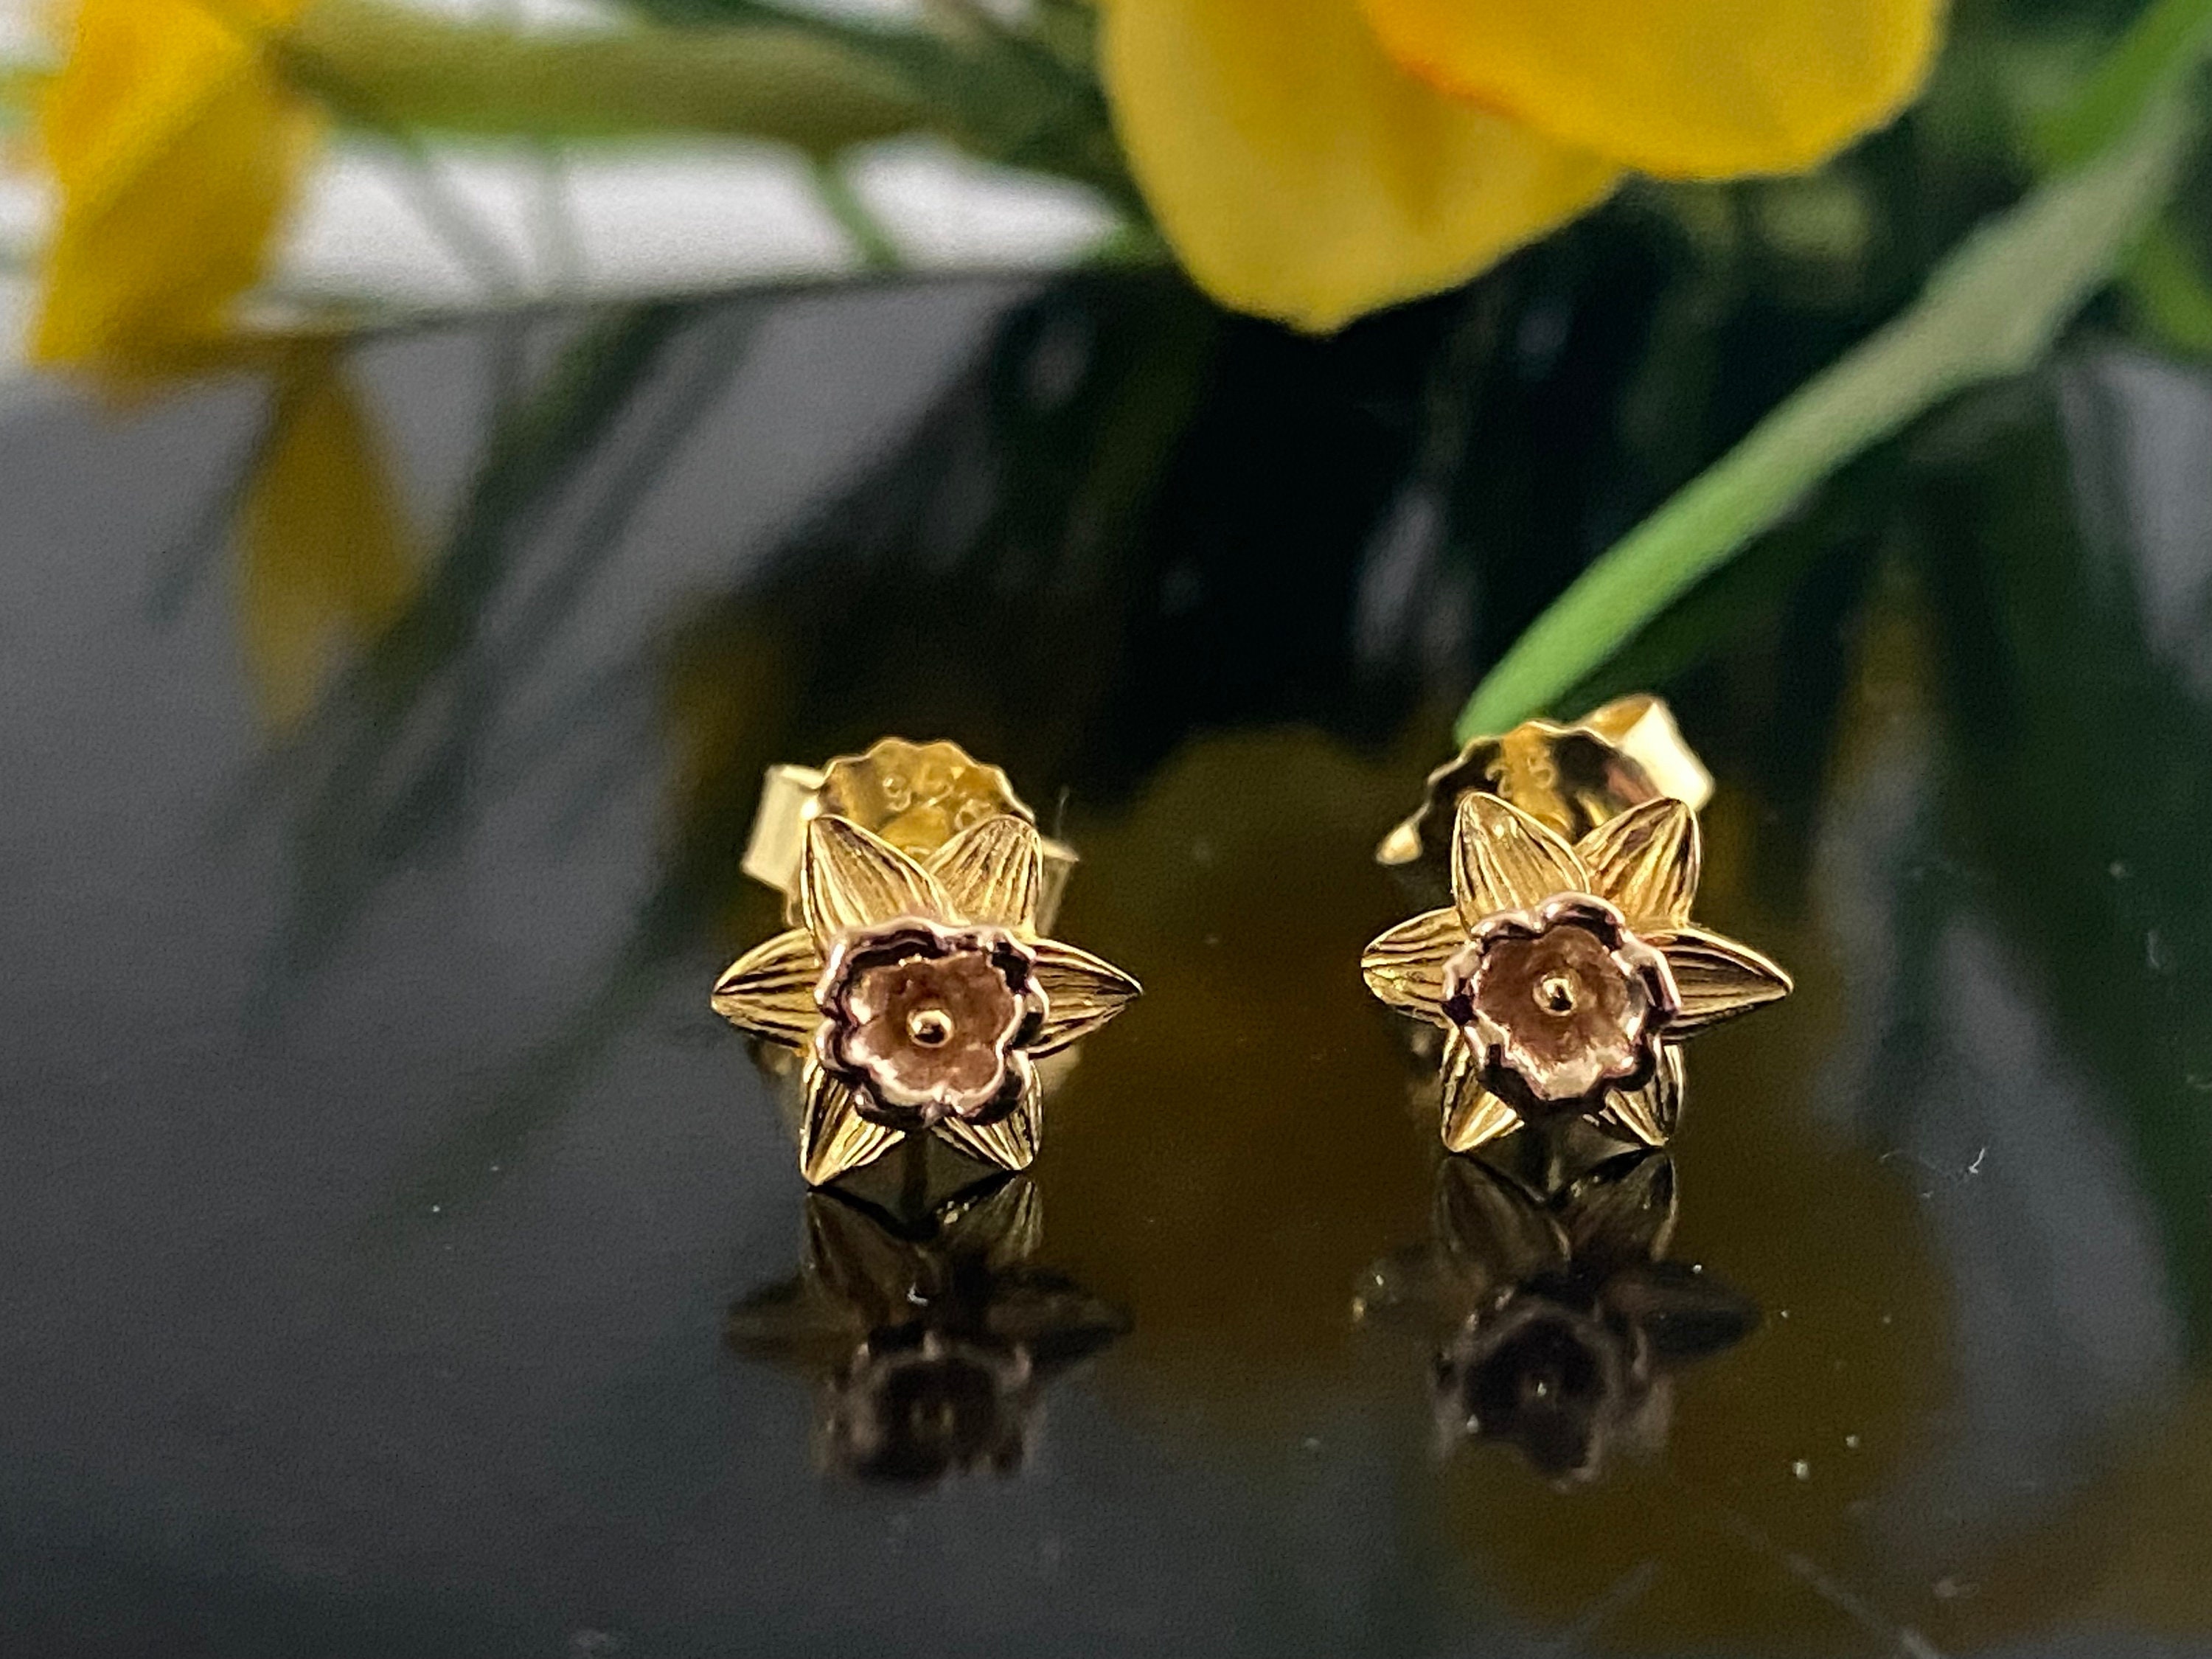 March Birth Flower Stud Earrings, Gold Vermeil